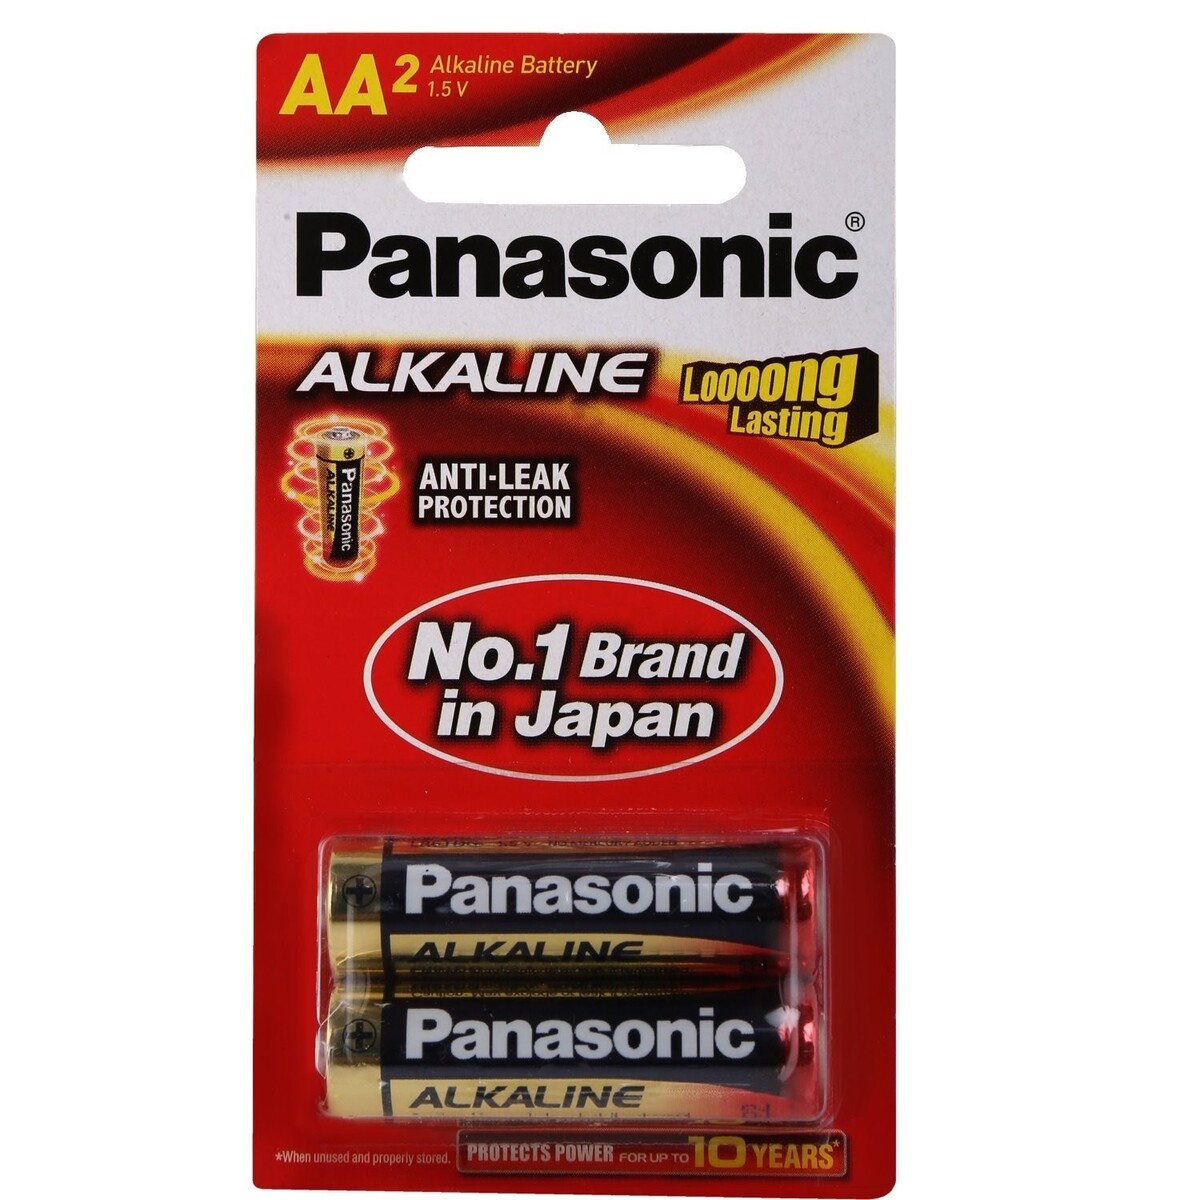 Panasonic Alkaline Battery AA 1.5V LR6TDG/2B